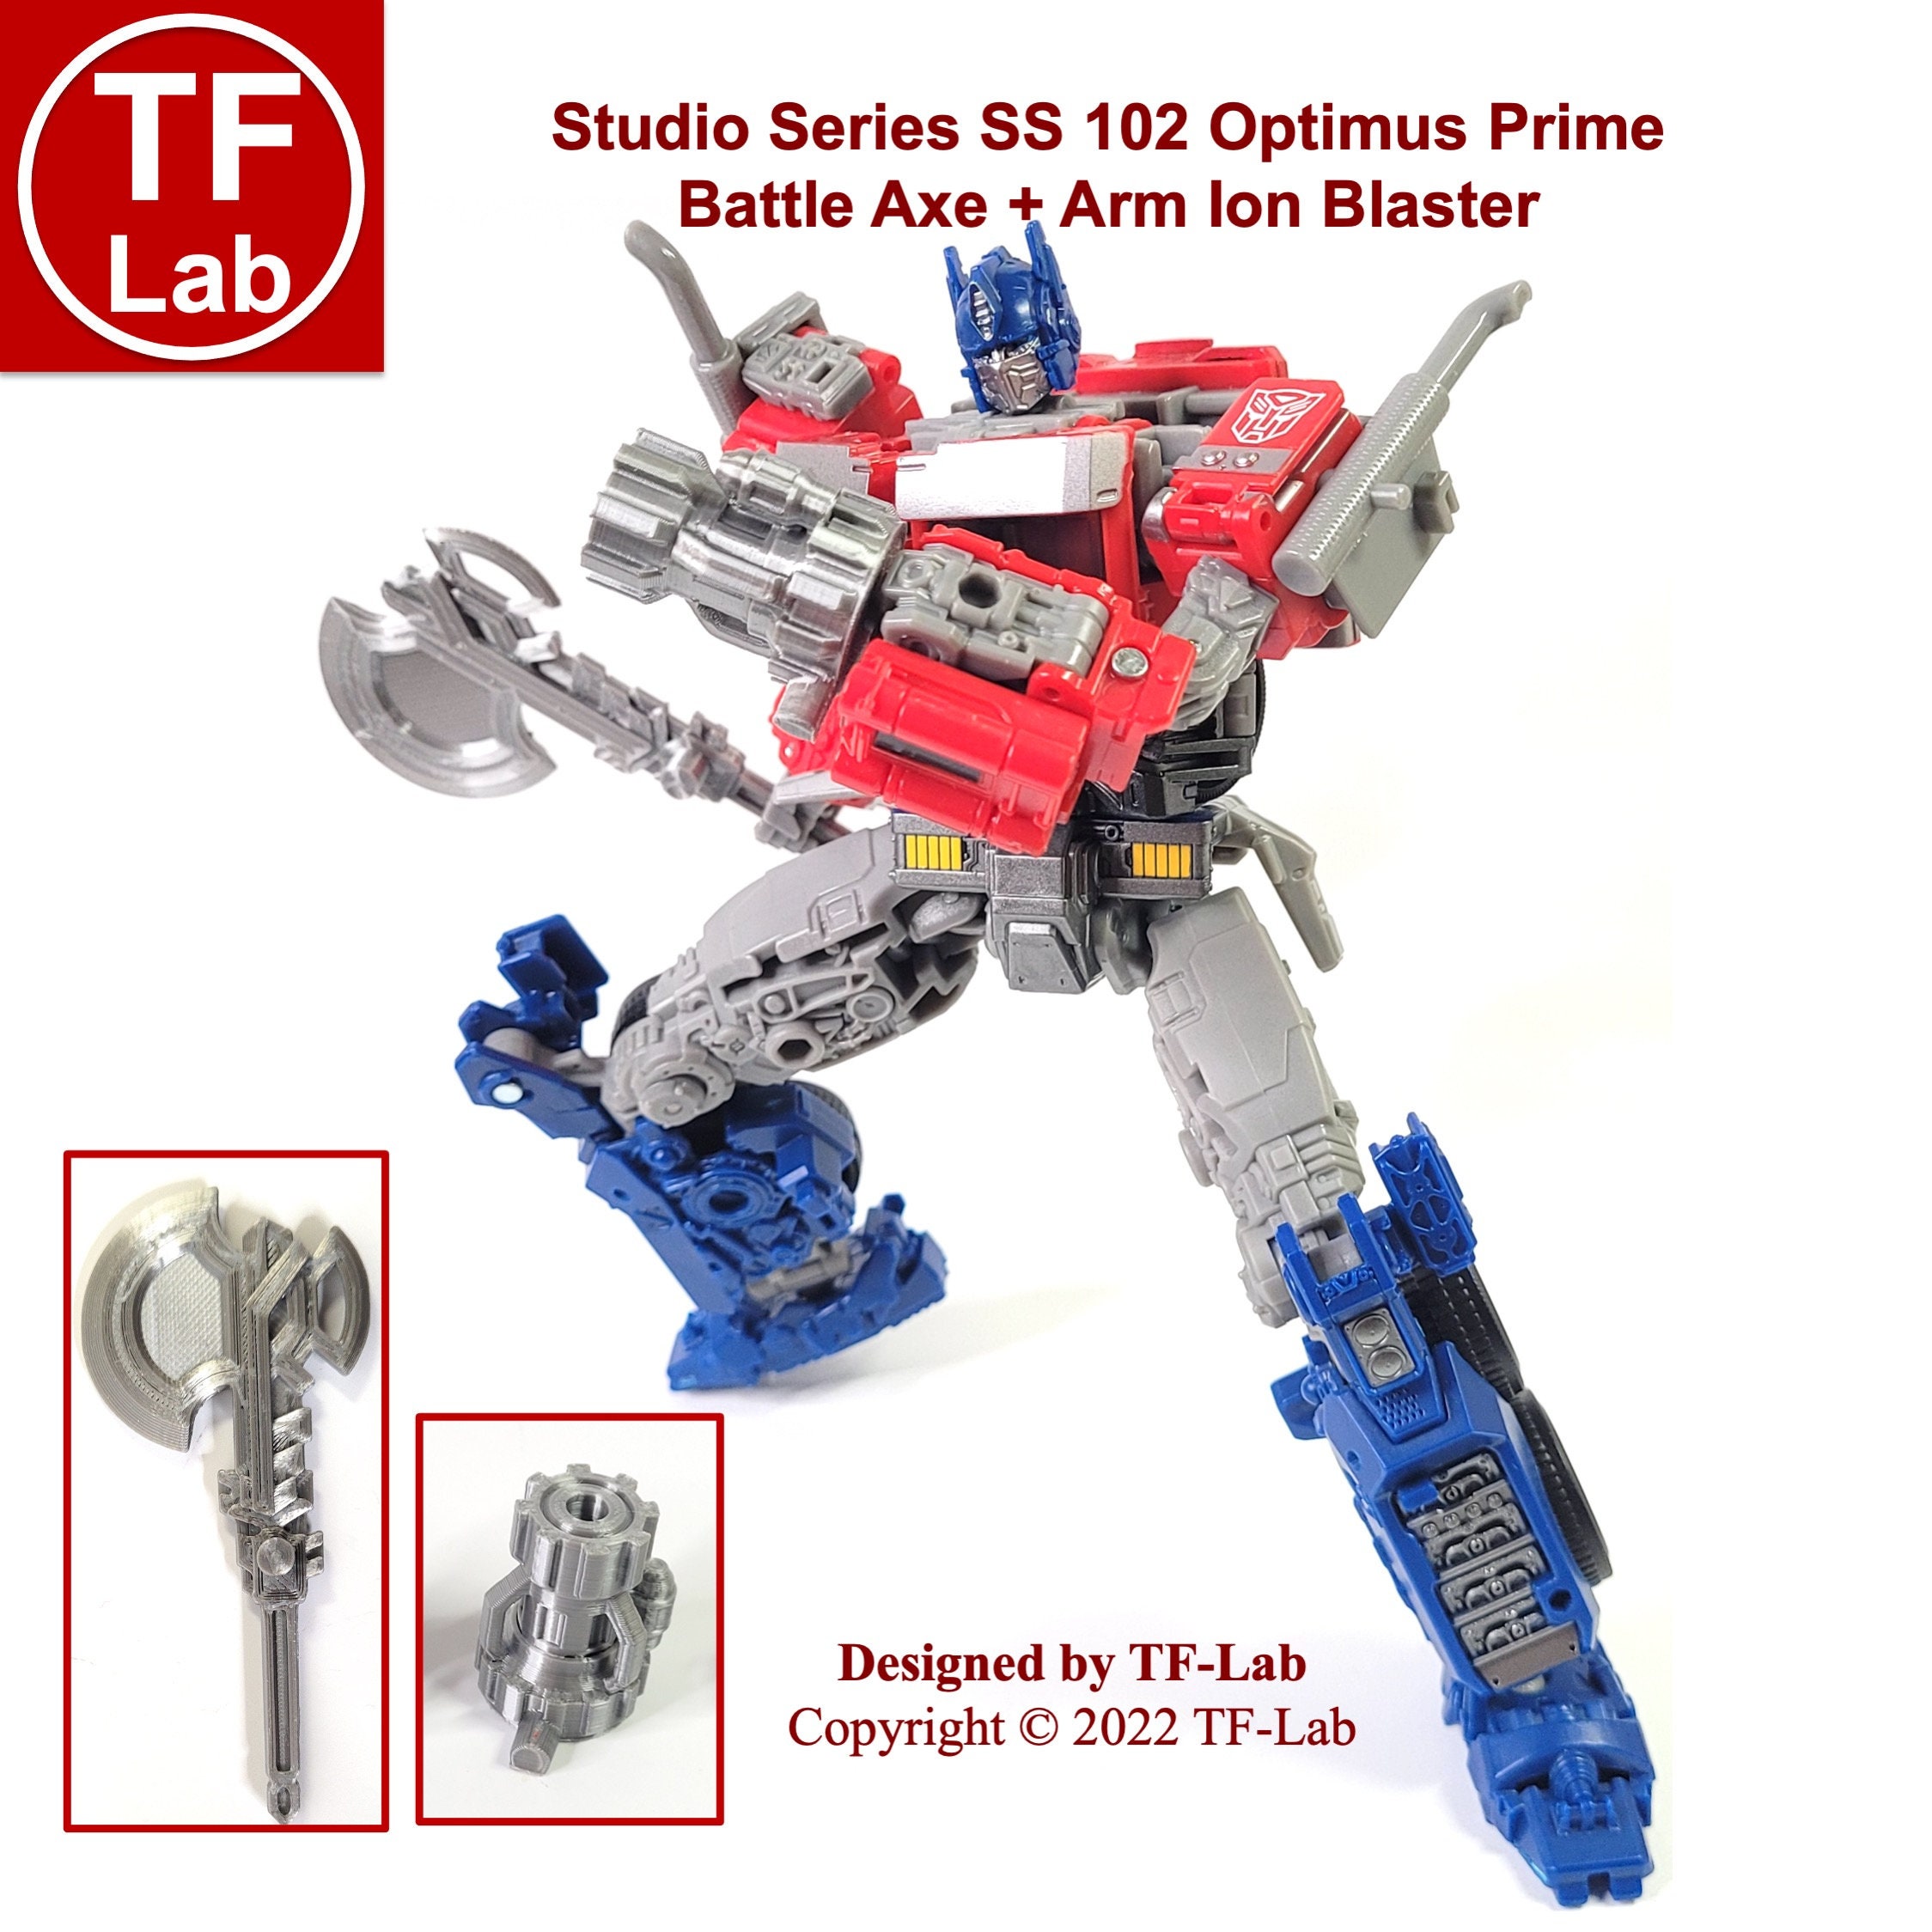  Sun-Staches Transformers Offiical Optimus Prime